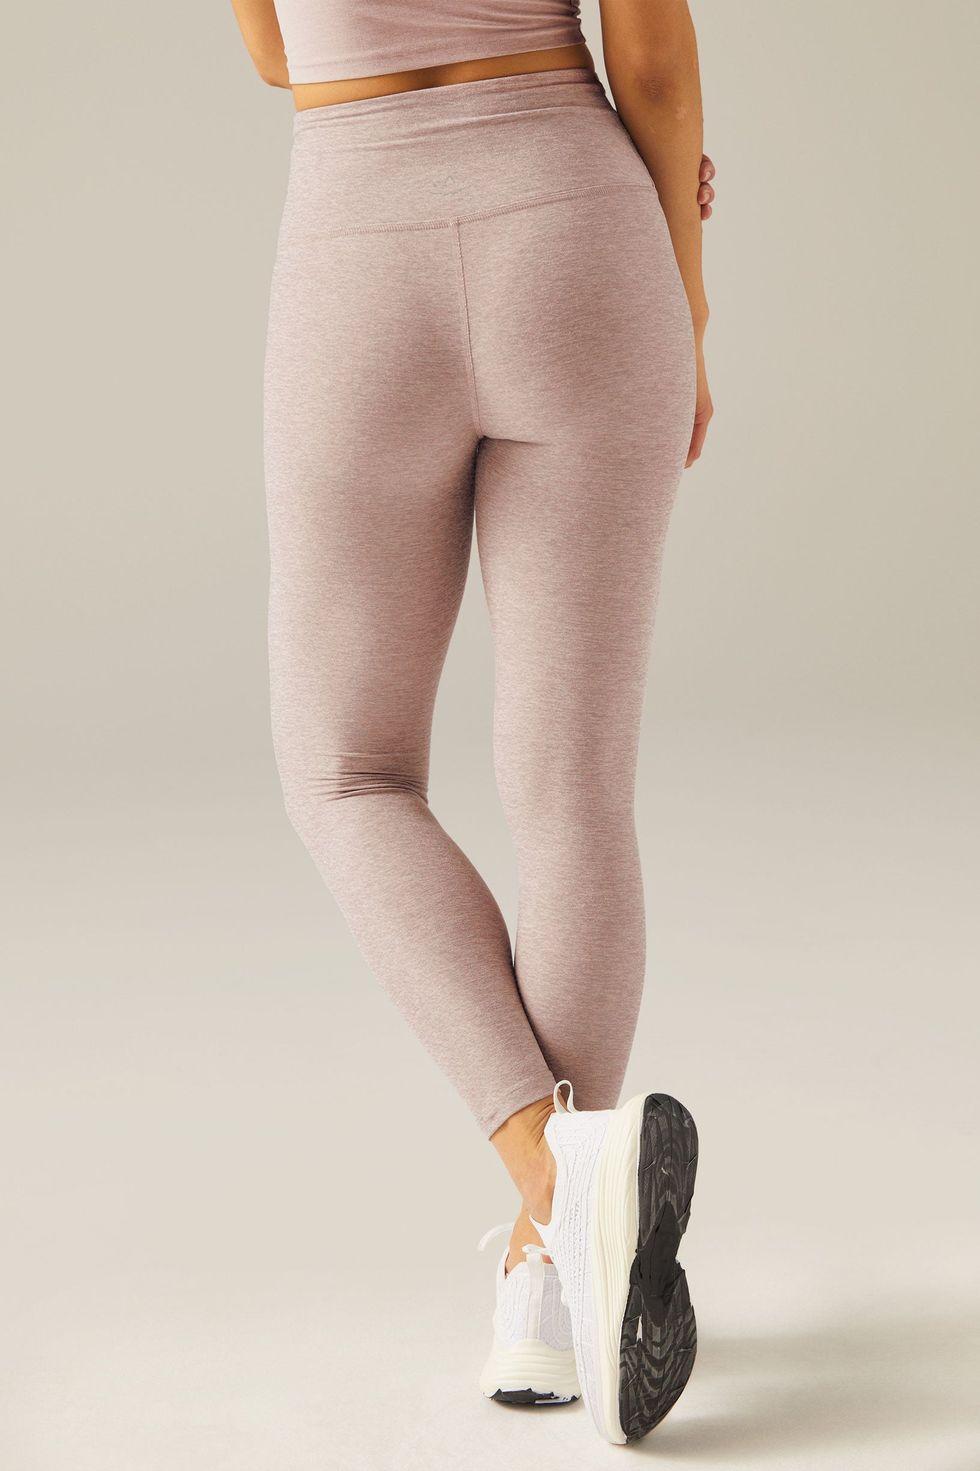 AUROLA Workout Leggings for Women Seamless Scrunch Tights Tummy